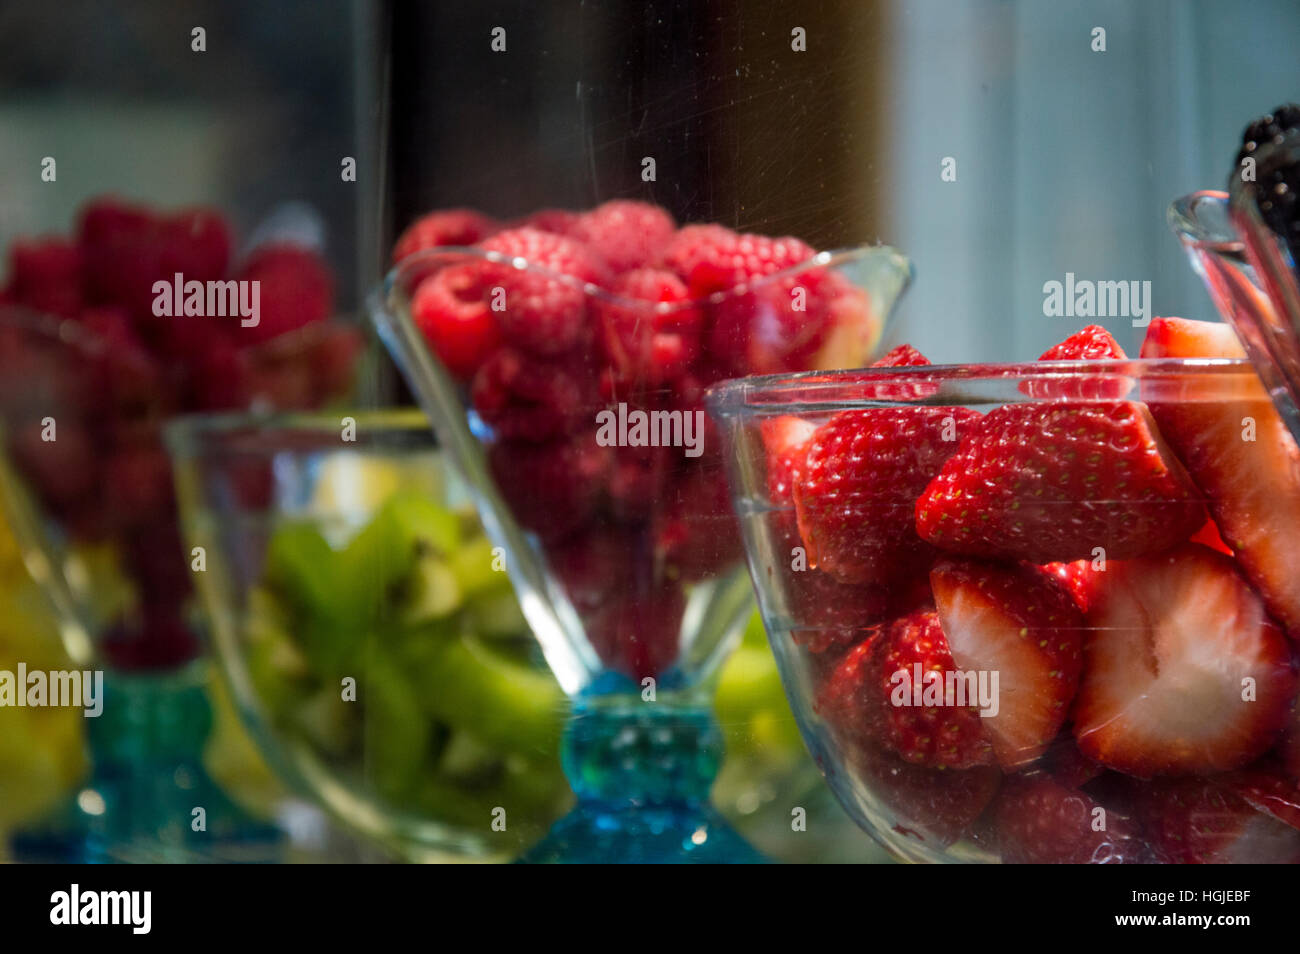 Flan de frambuesa, fresa fruta kiwi afrutado fresco sudor de vidrio en el mercado de alimentos gelateria Foto de stock